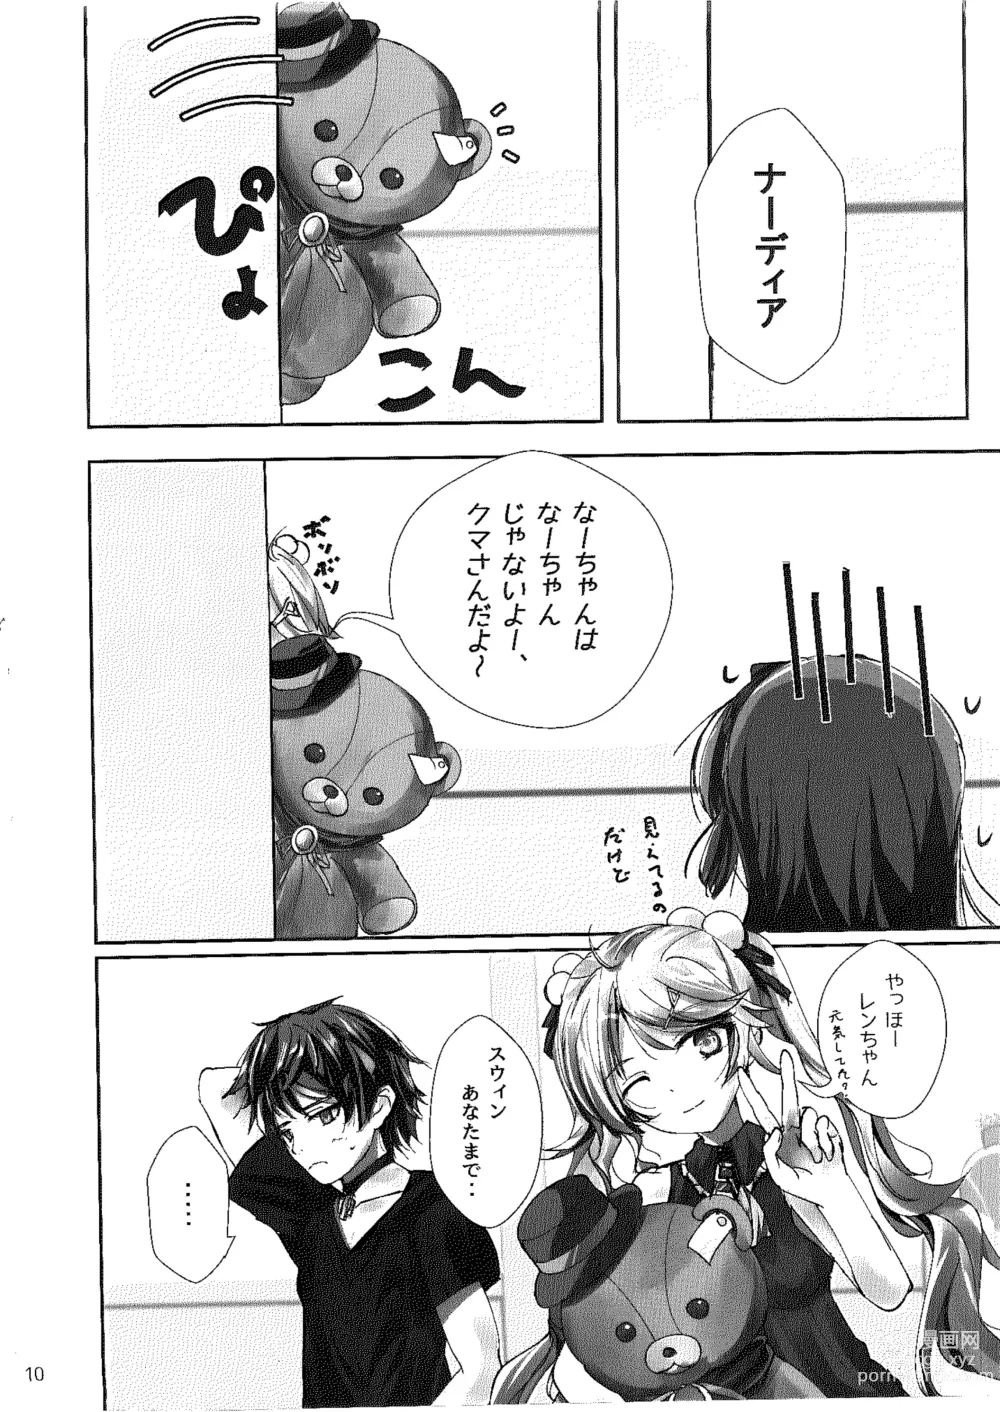 Page 9 of doujinshi Ren no Hajimari